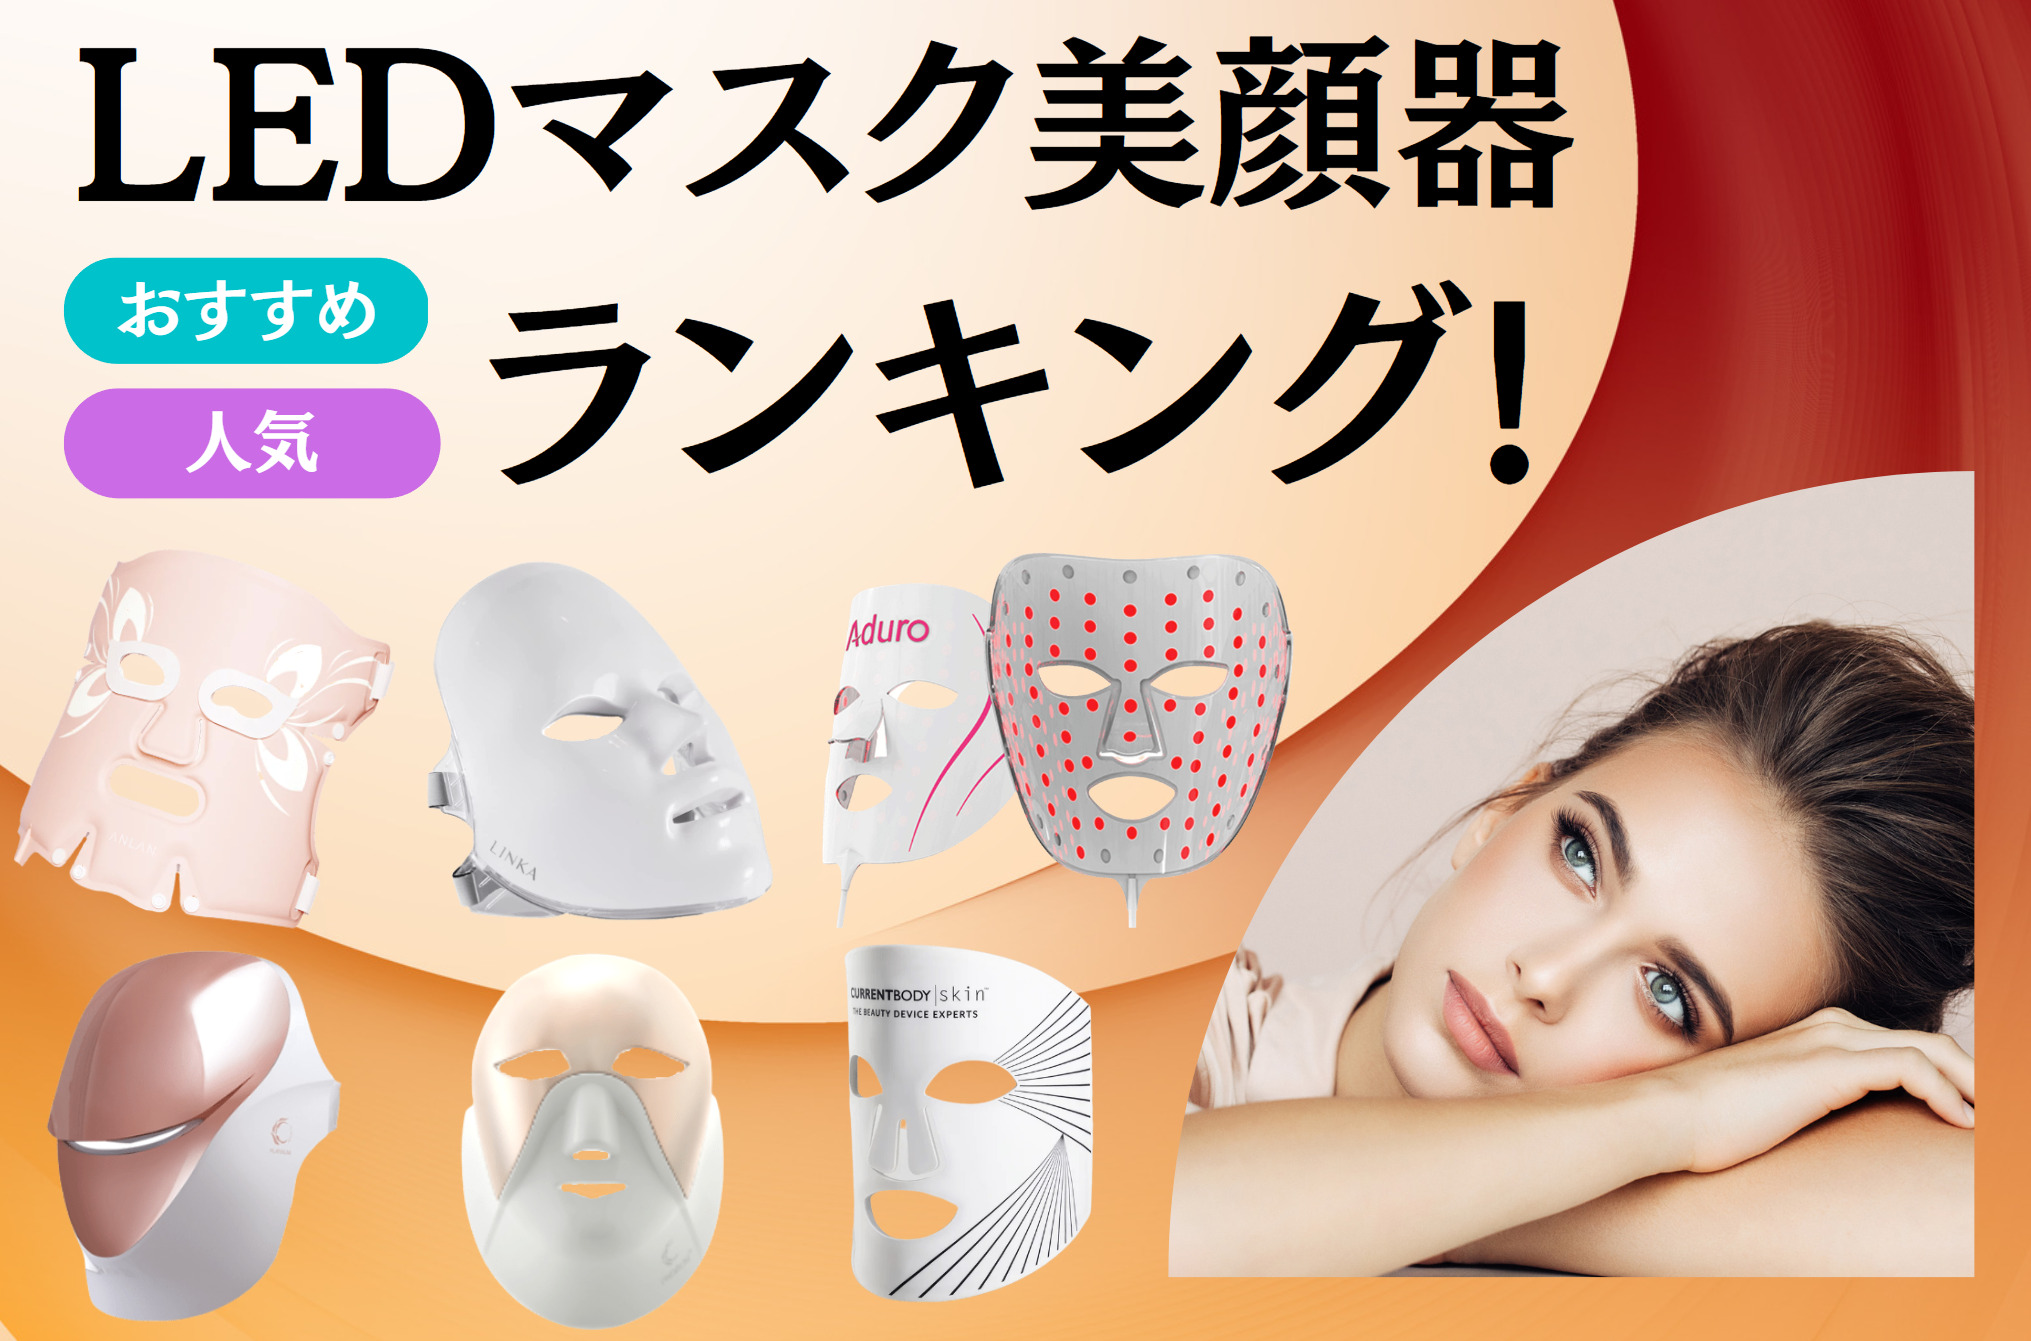 LEDマスク美顔器おすすめ人気ランキング口コミ効果まとめ!美容先進国「韓国」の機種からカレントボディまで特集